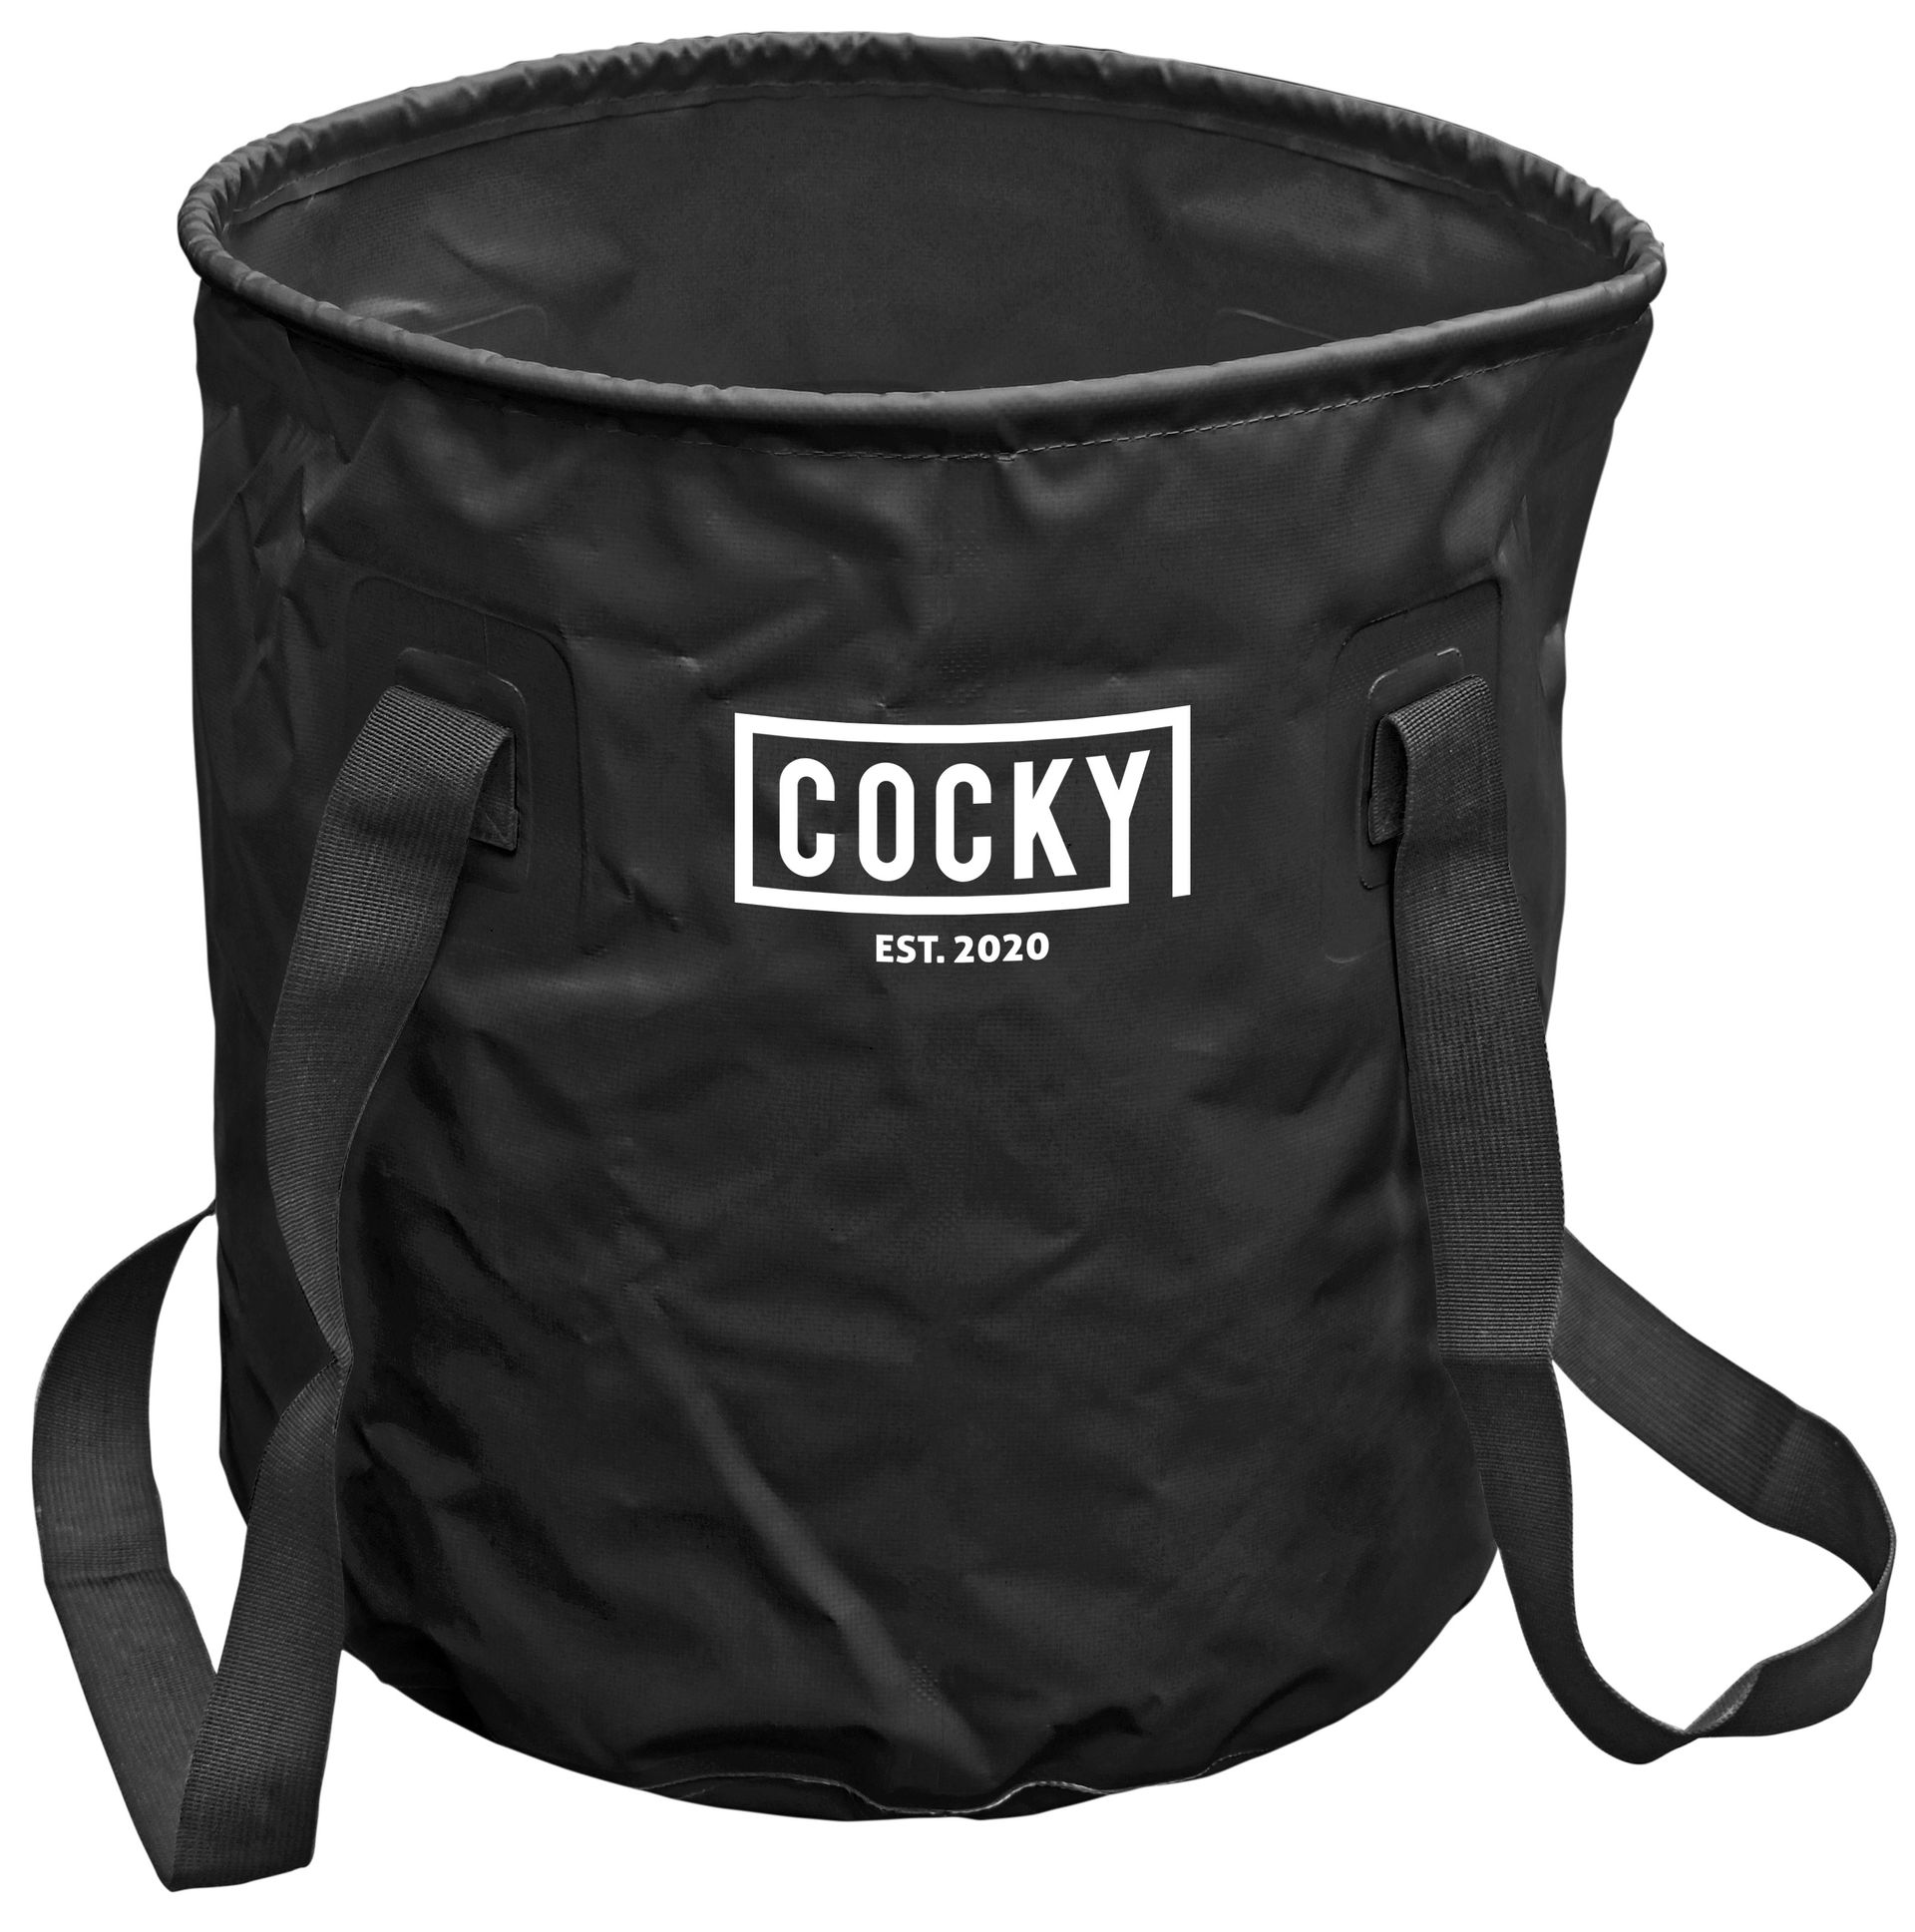 'The Cocky Wet Bucket'